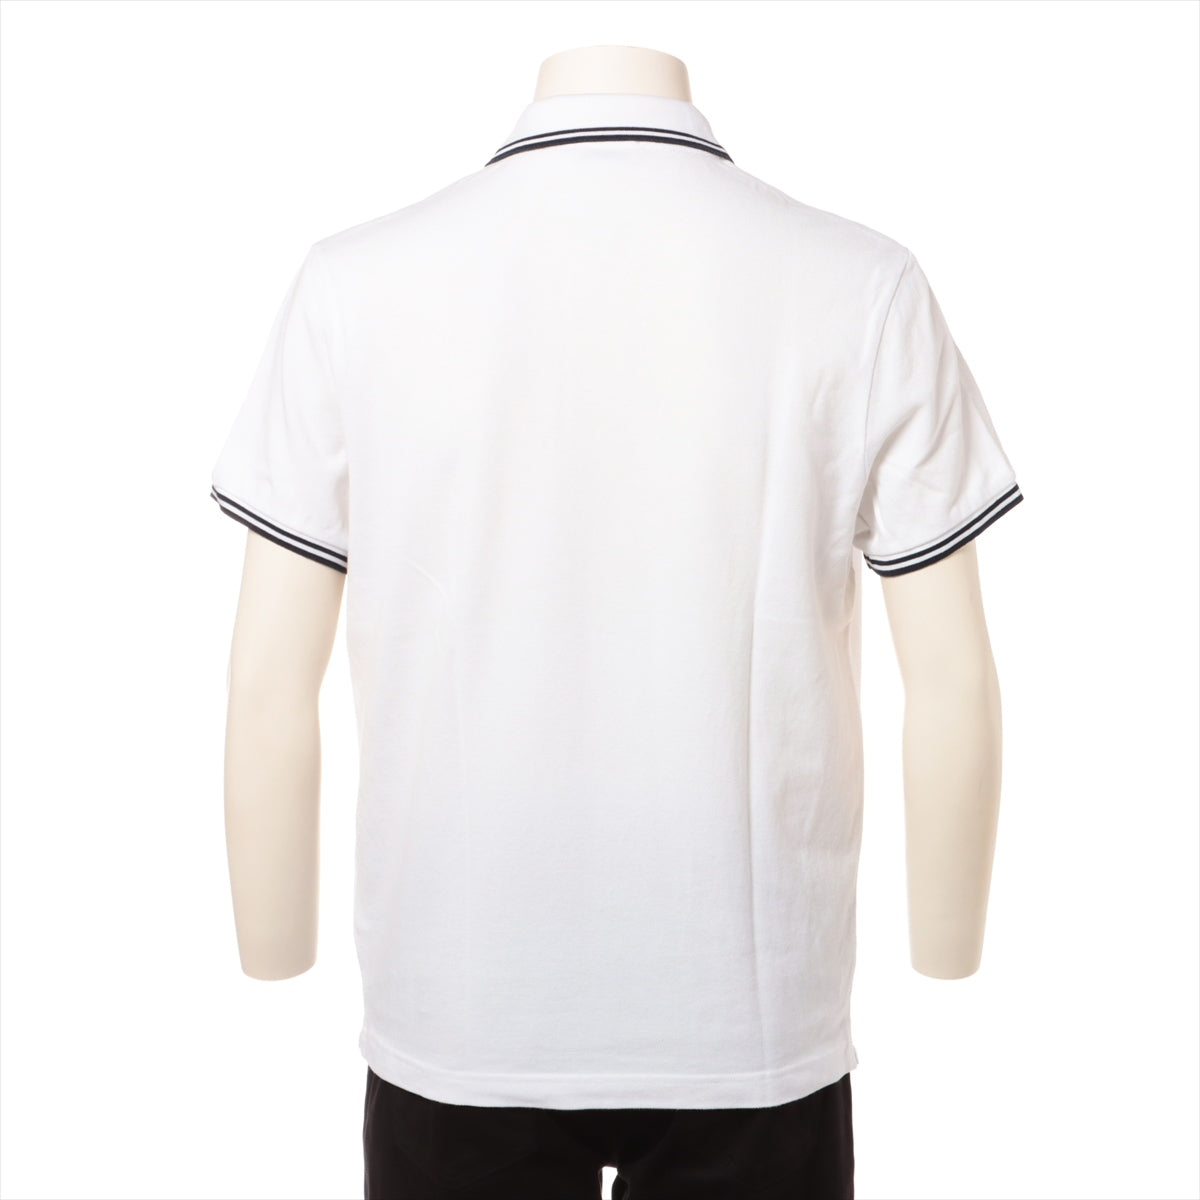 Moncler 14 years Cotton Polo shirt M Men's White  510918304300